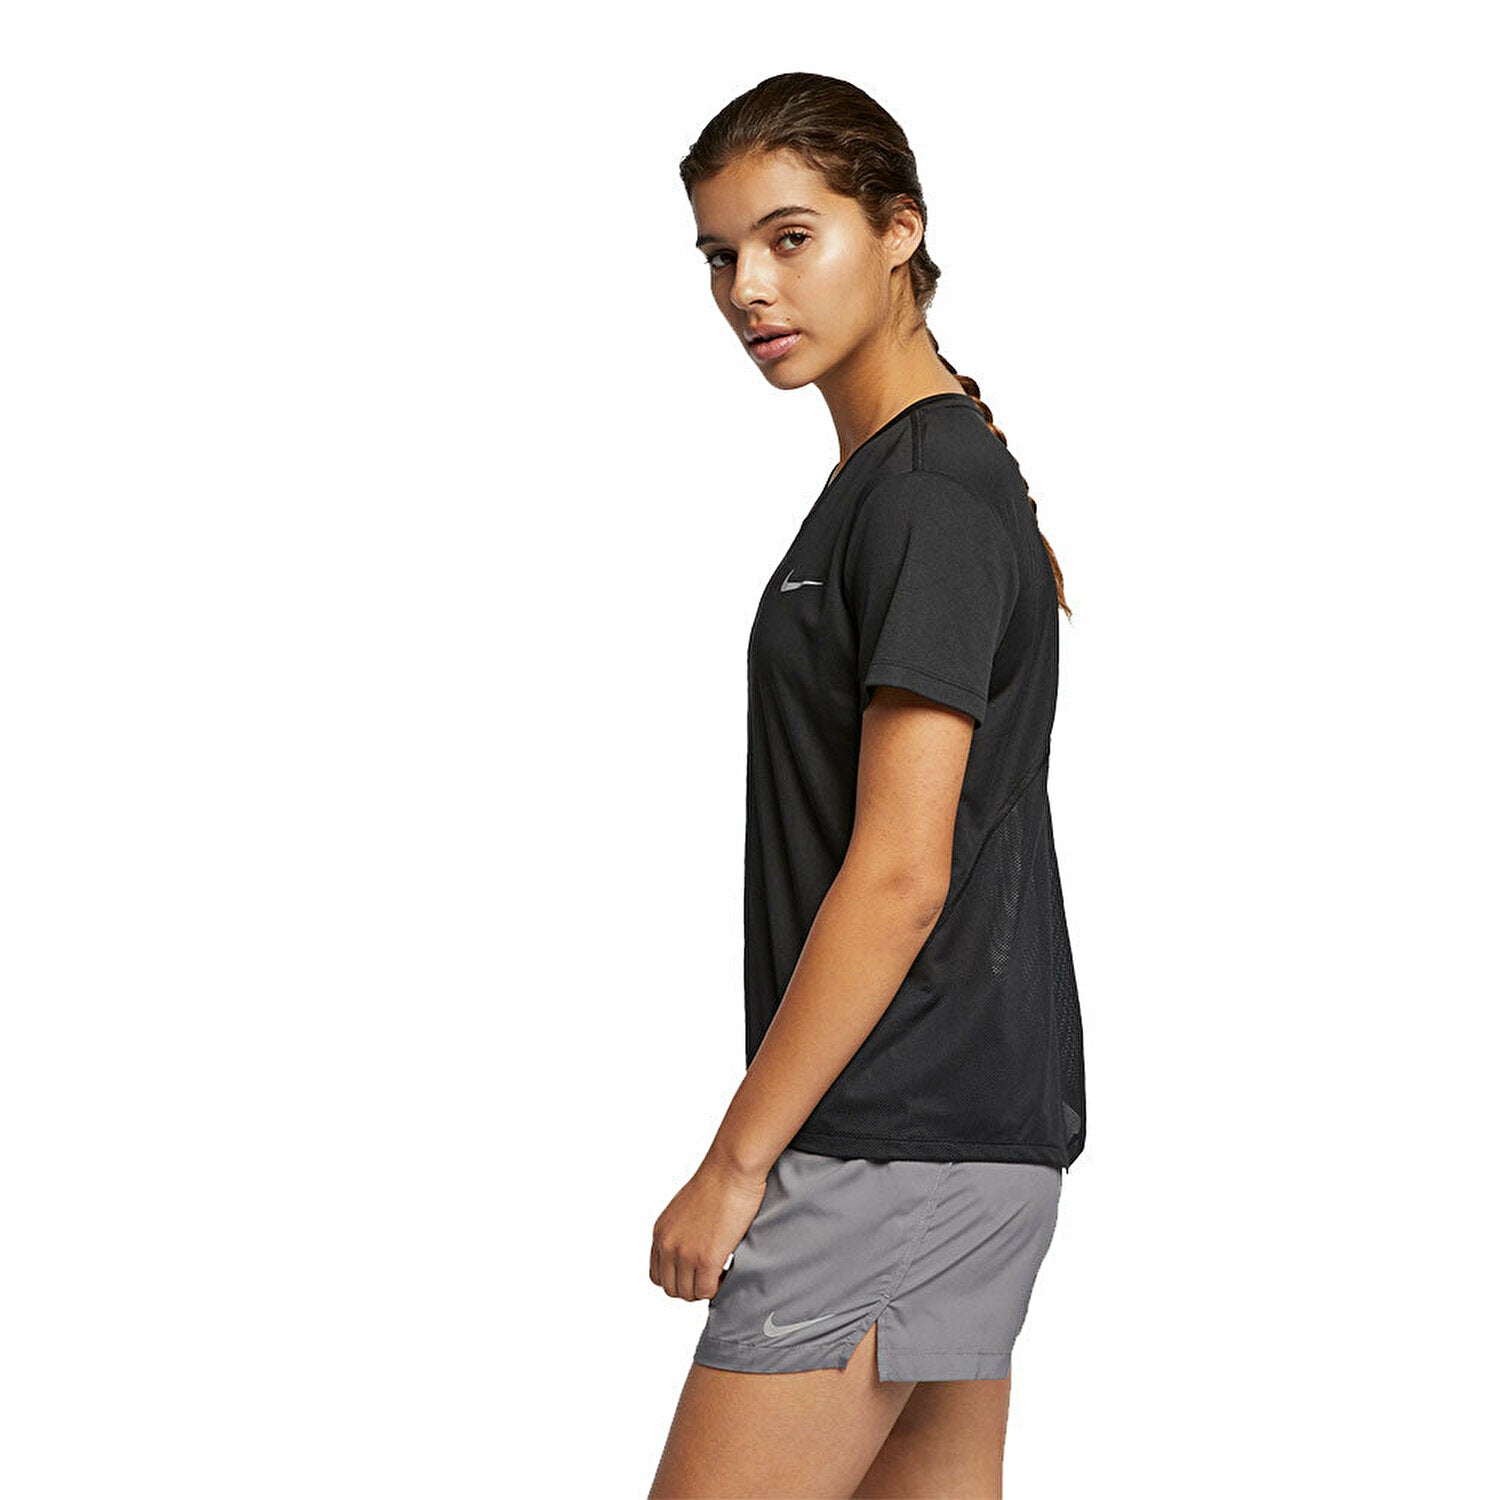 Nike Miller short sleeve T-shirt women